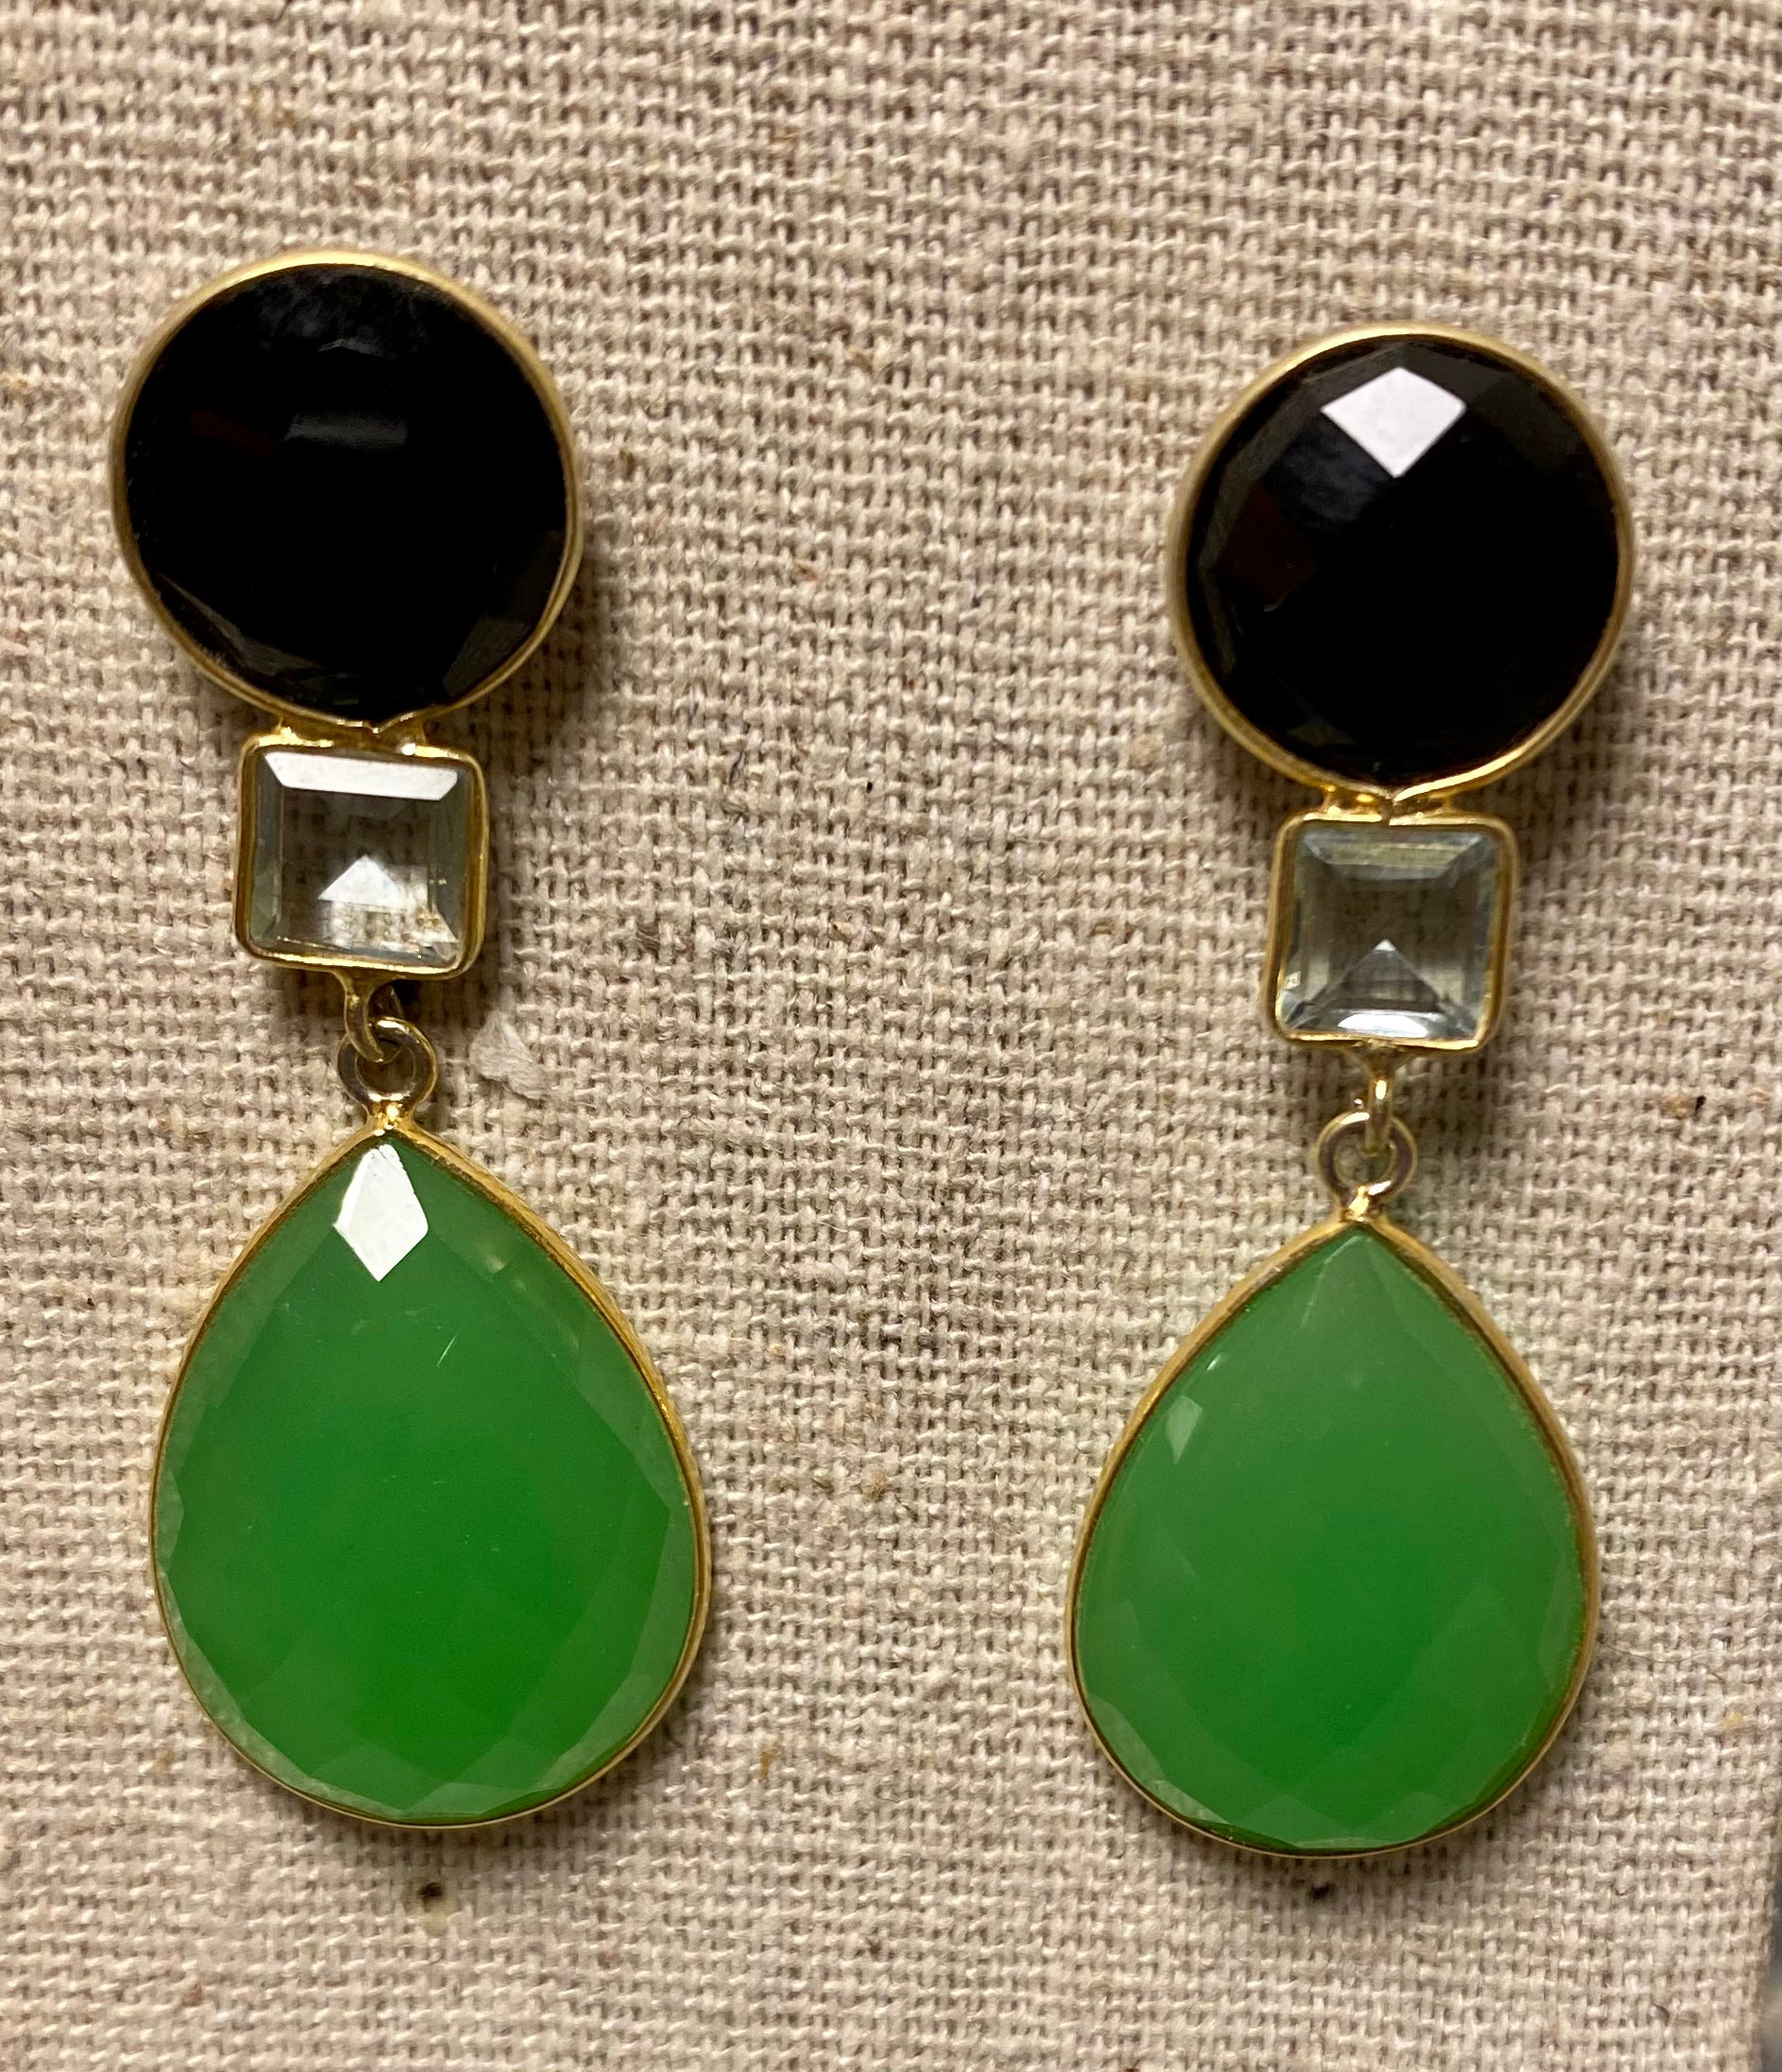 Black Onyx,Rock Crystal and Green Chalcedony Mavis Earrings